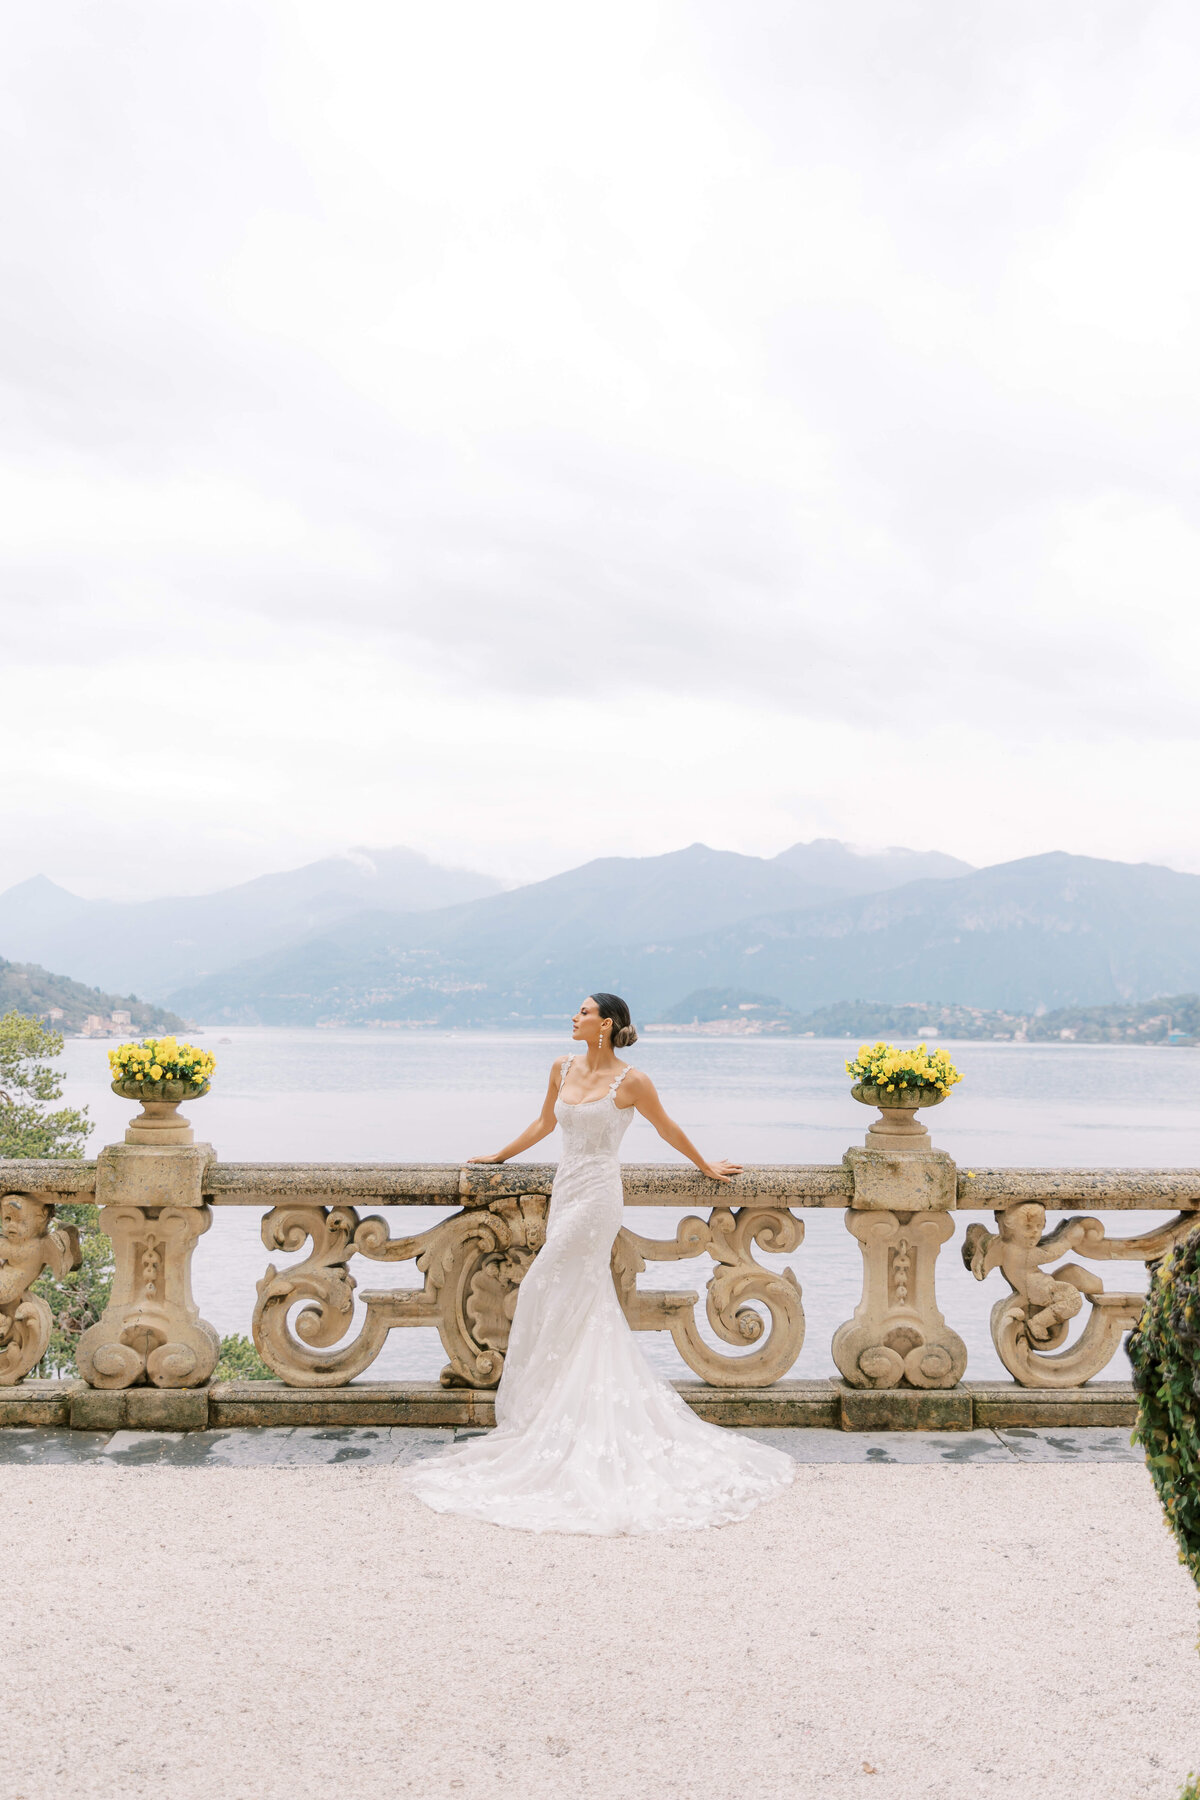 Villa-del-Balbianello-wedding-venue-lake-como-italy-99